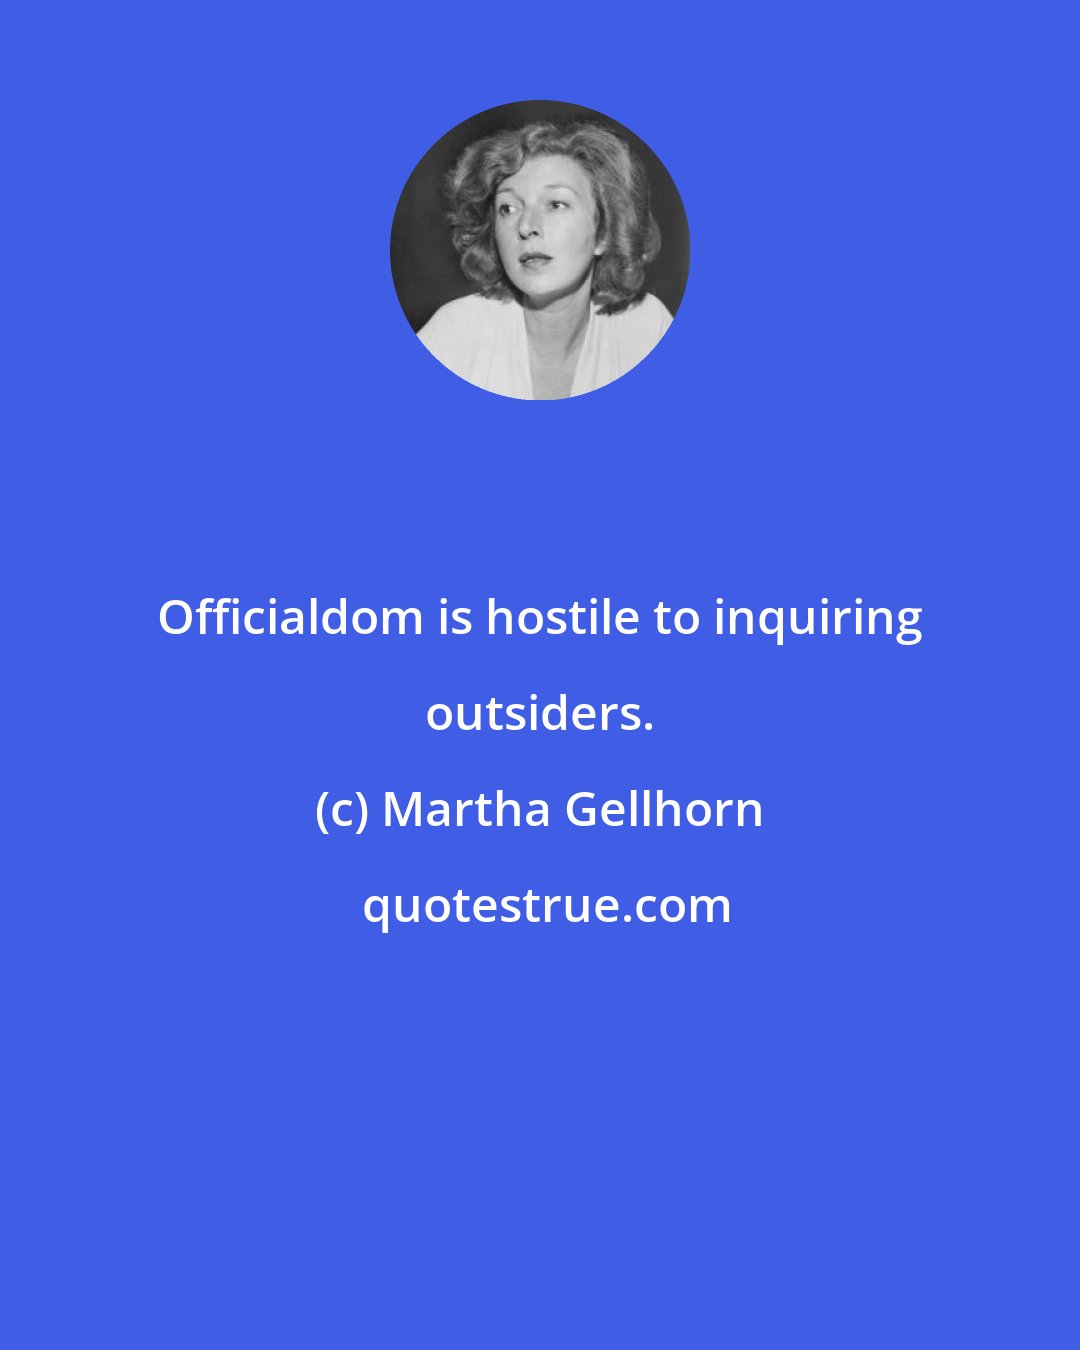 Martha Gellhorn: Officialdom is hostile to inquiring outsiders.